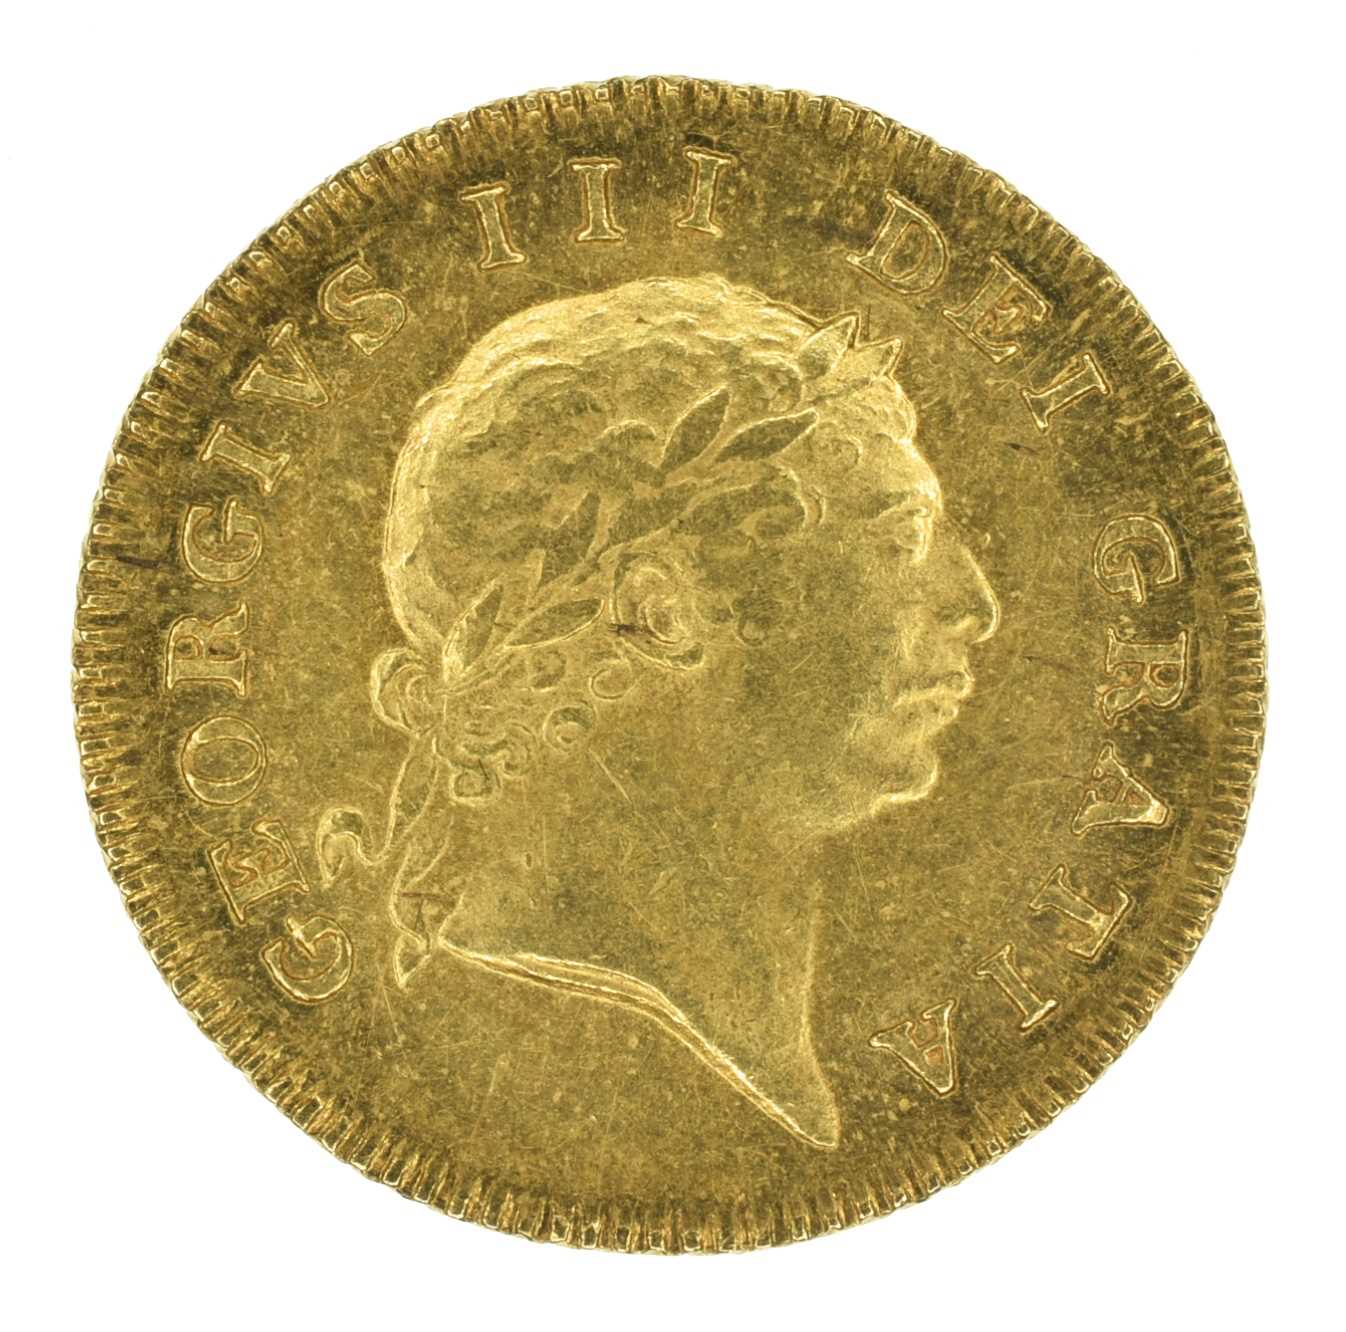 Lot 134 - King George III, Half-Guinea, 1804.